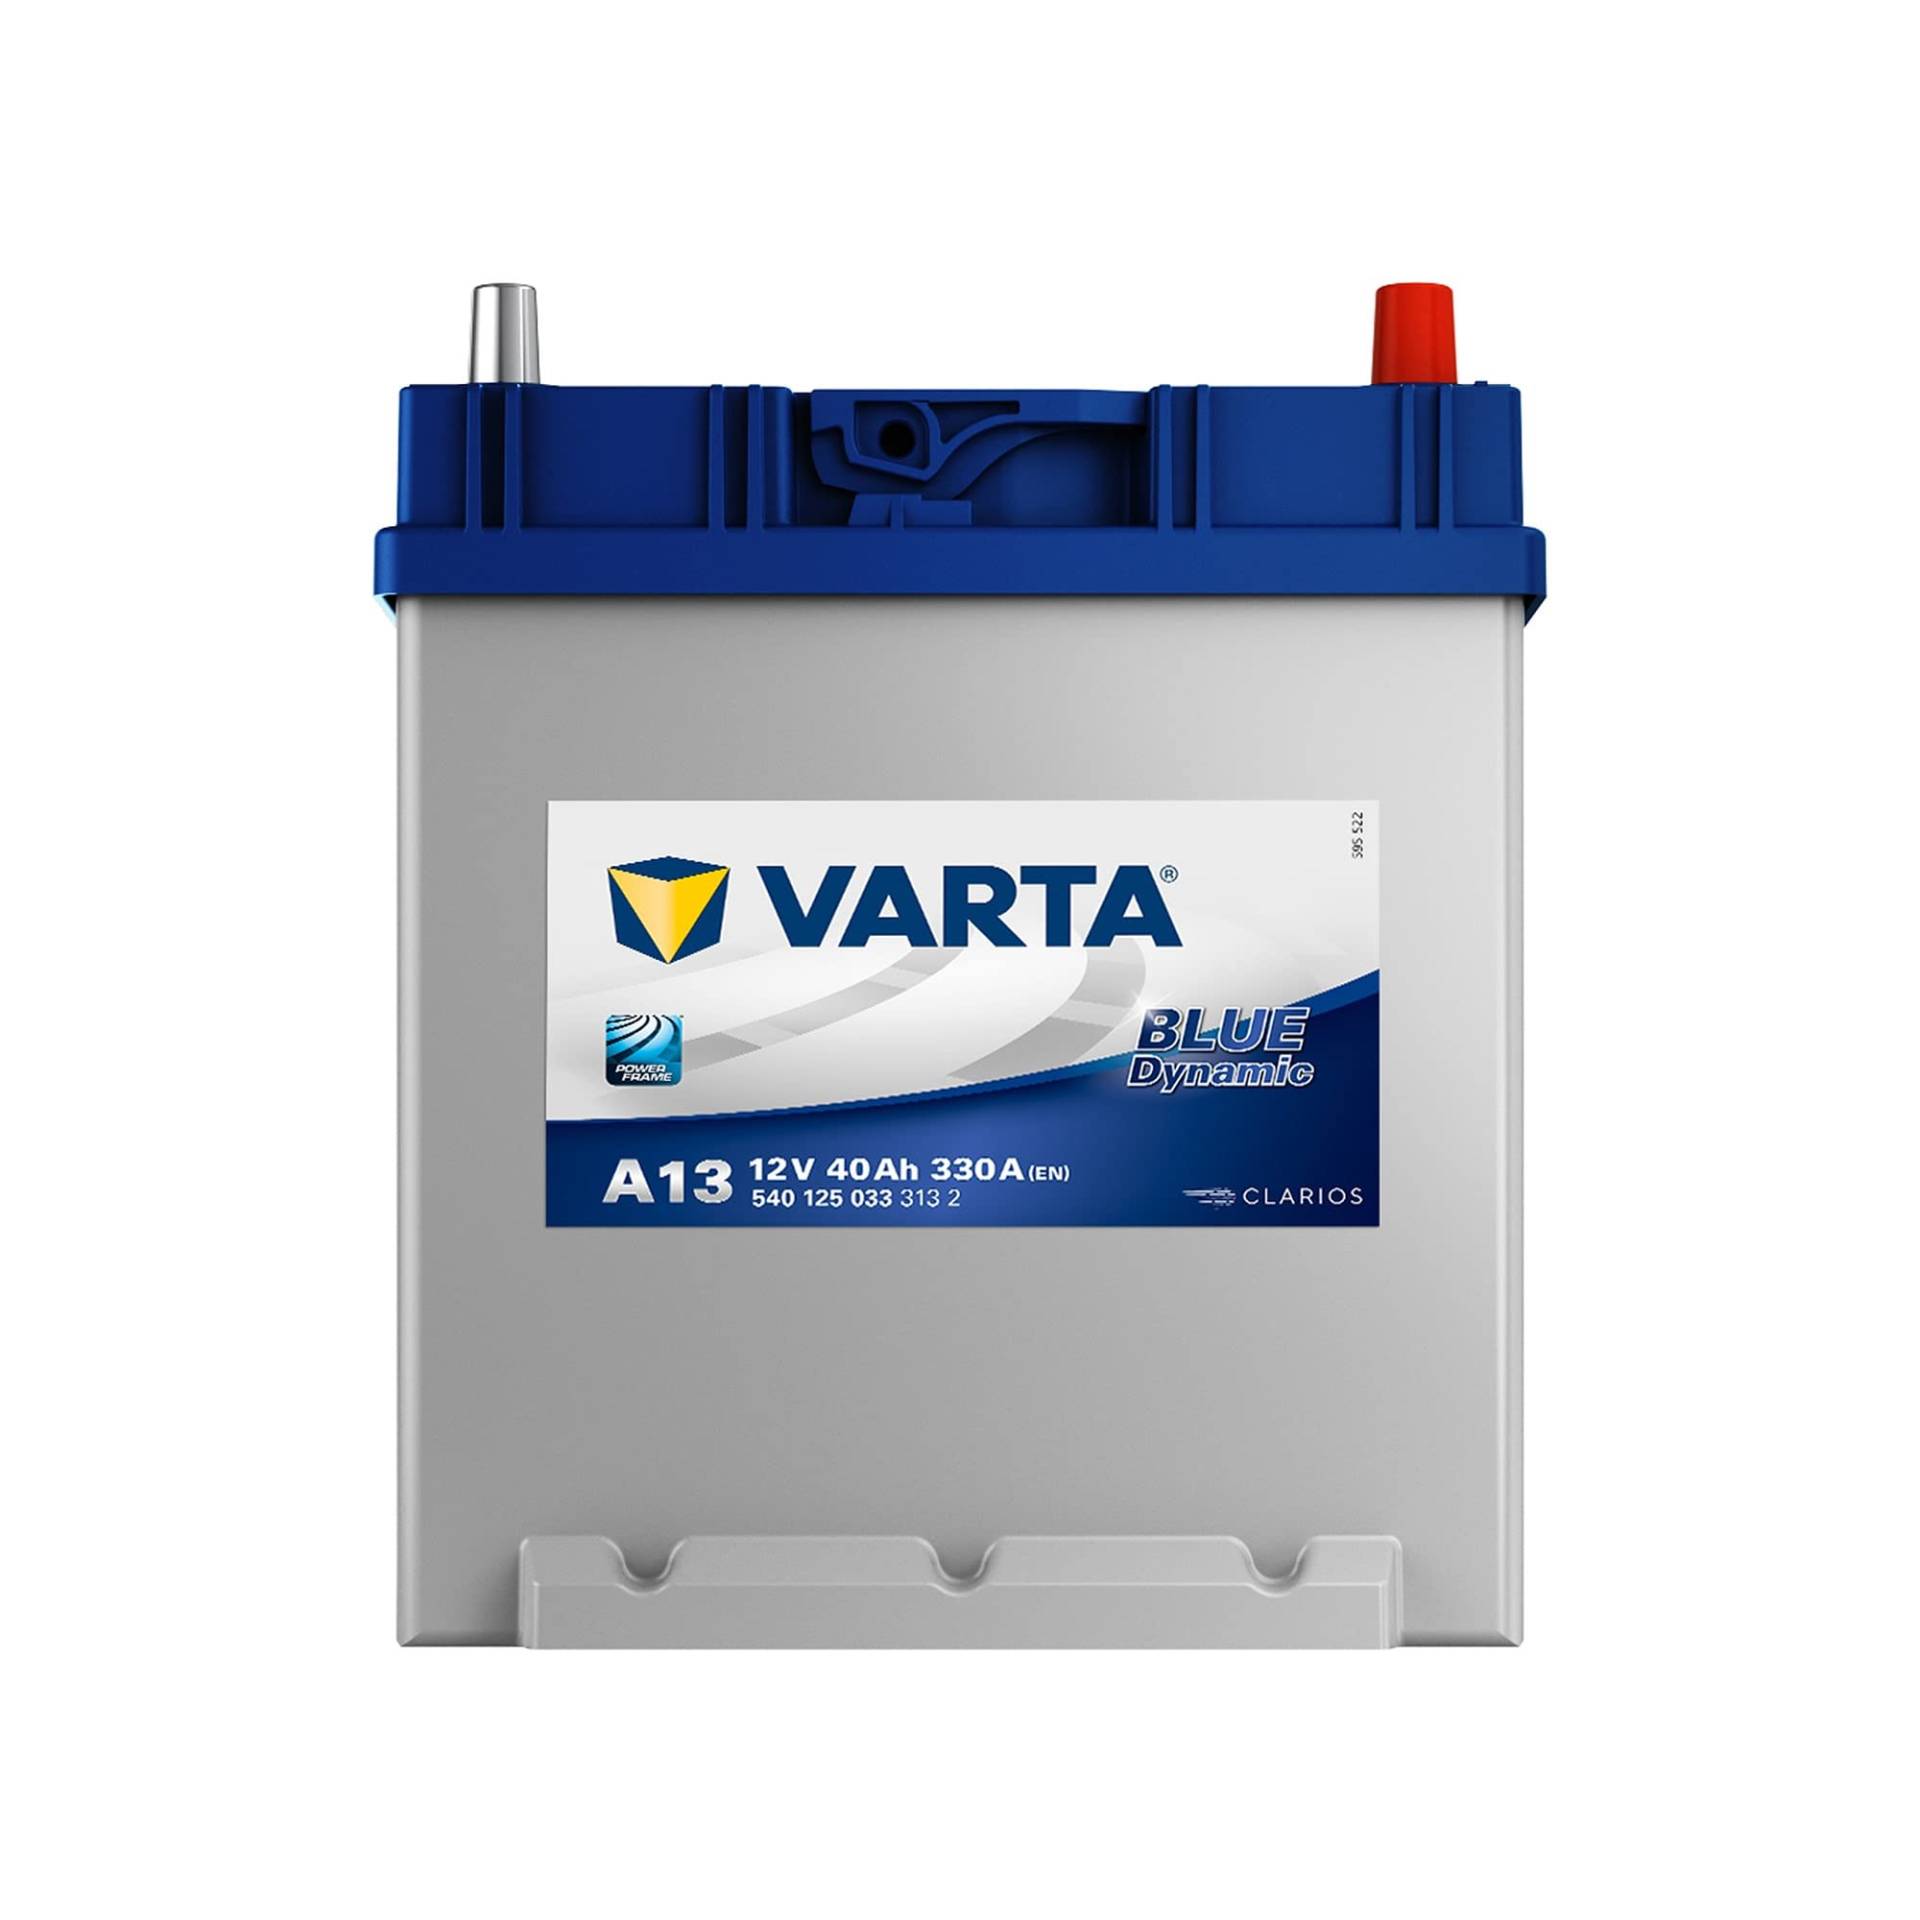 Varta A13 12V 40Ah 330 A(EN) Blue Dynamic Autobatterie ETN 540 125 033 von Varta